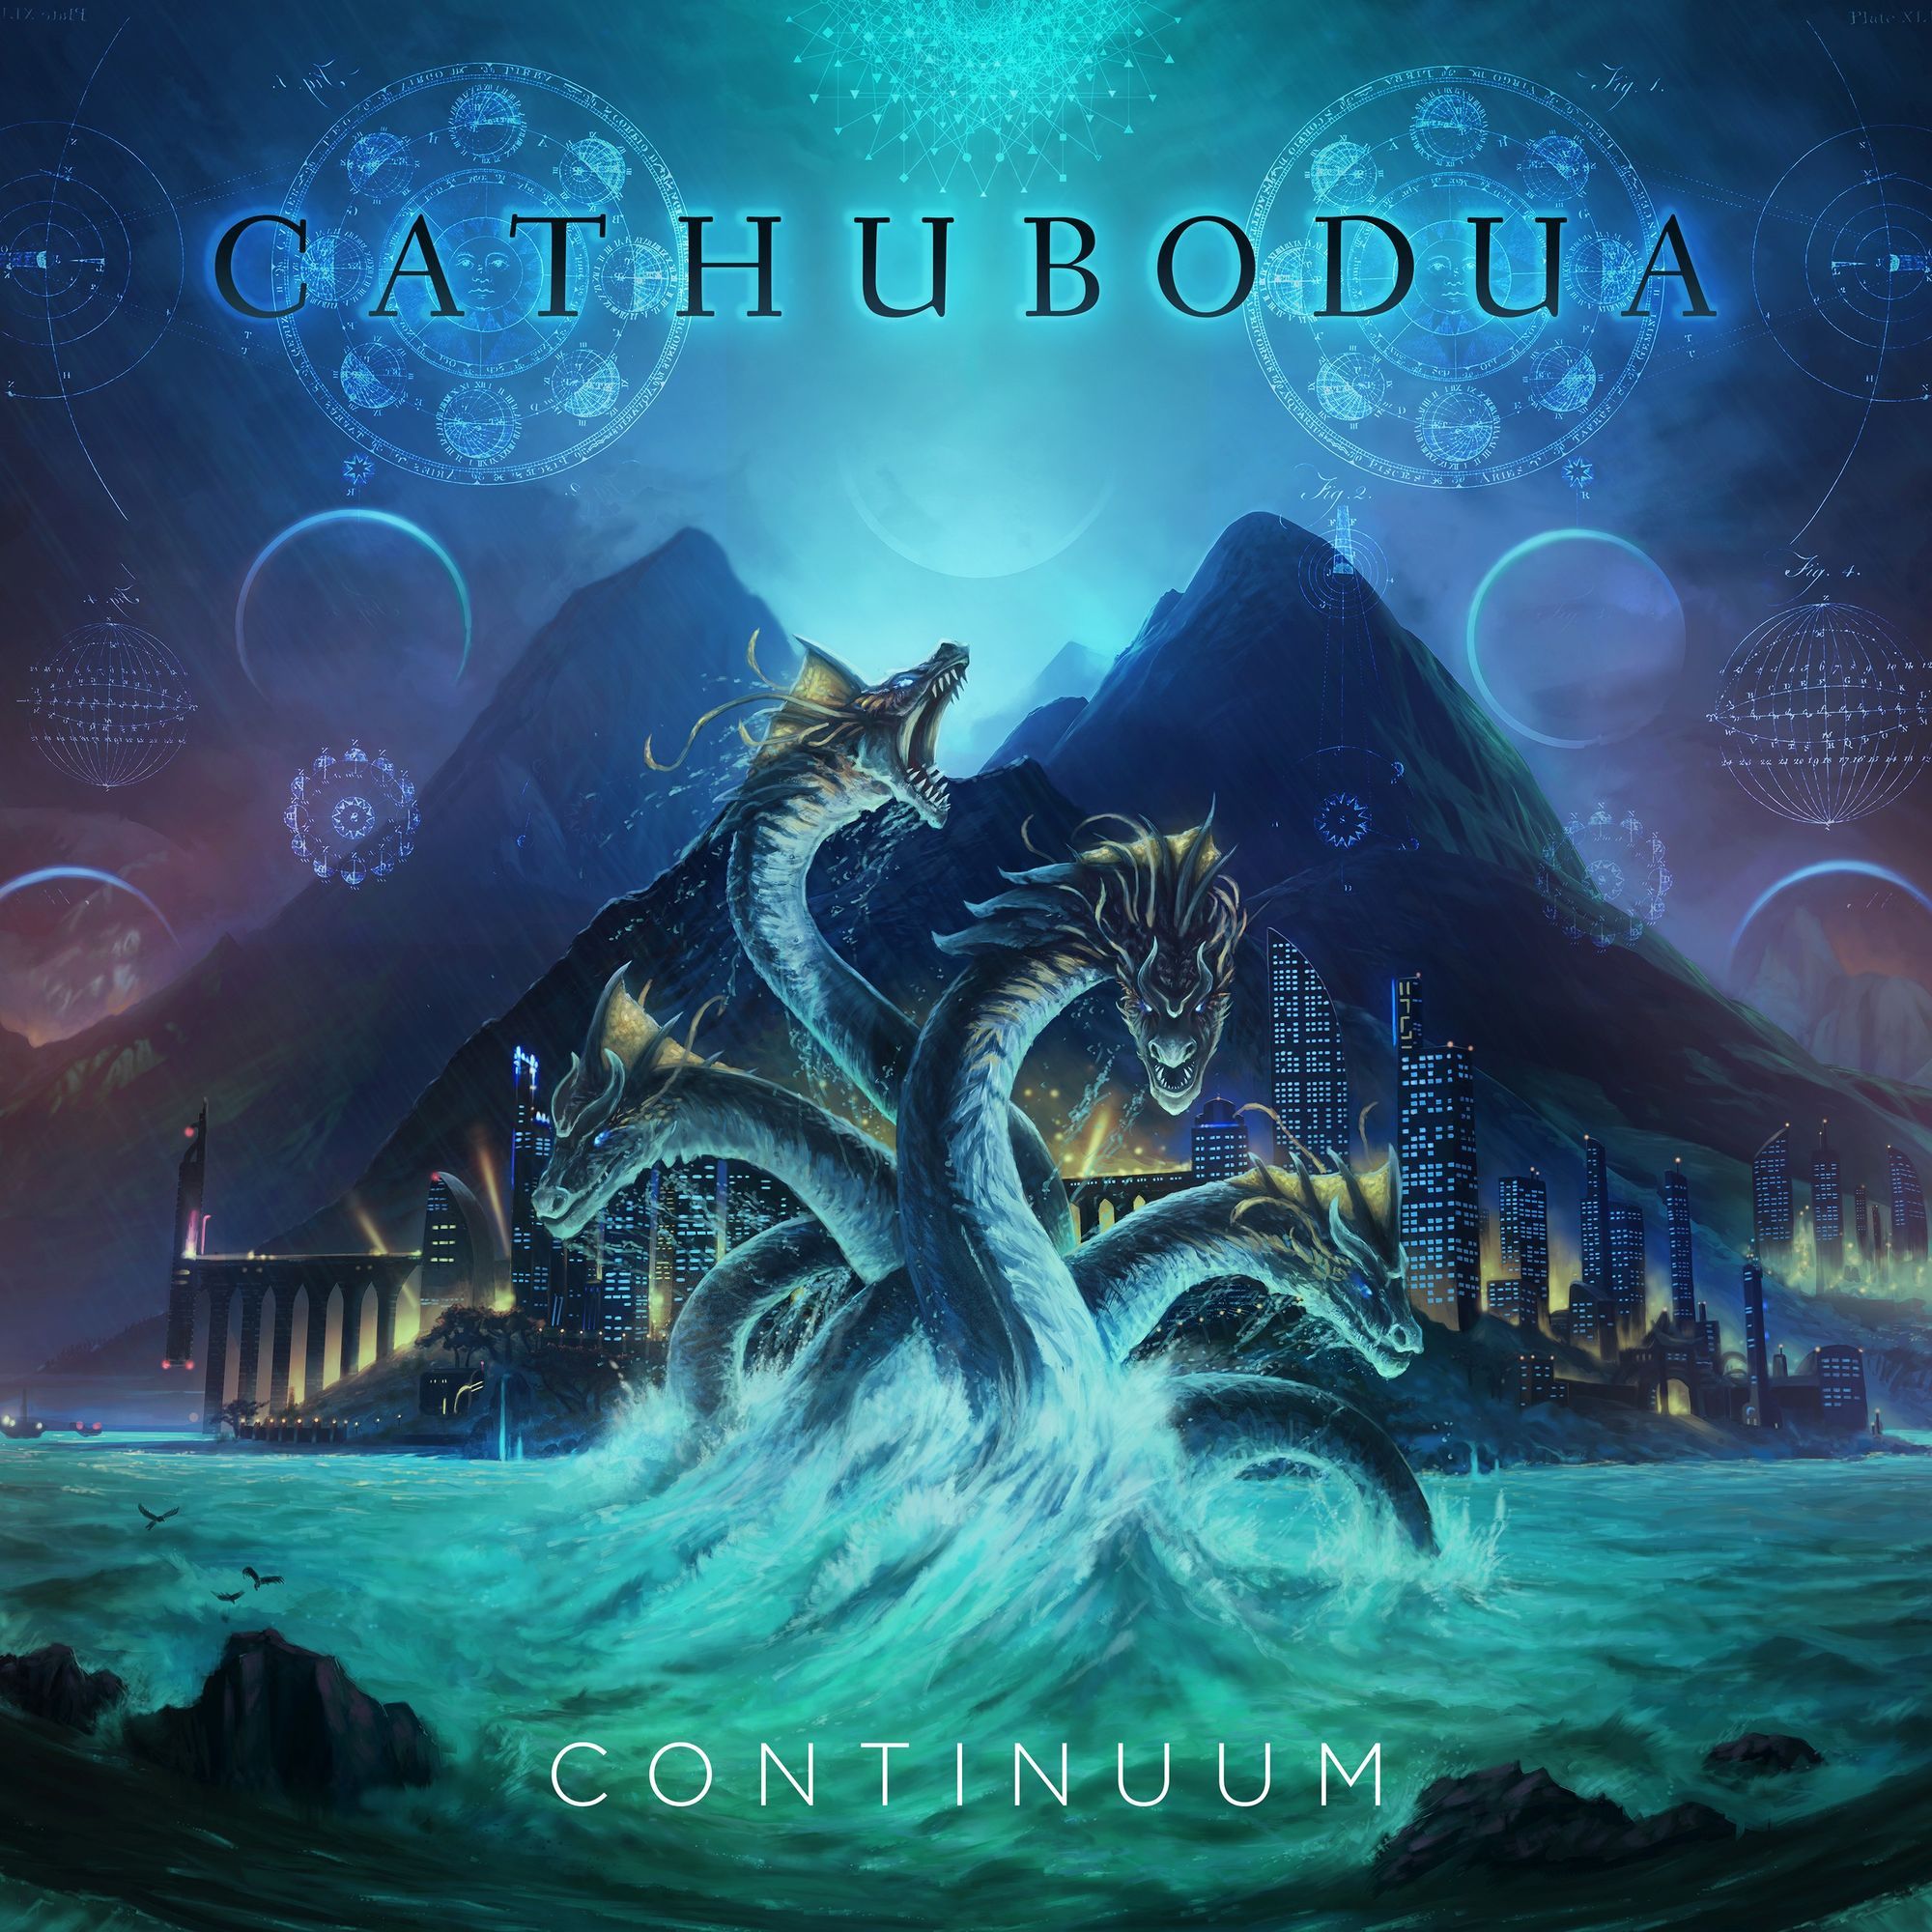 Cathubodua - Hydra (lyric video)